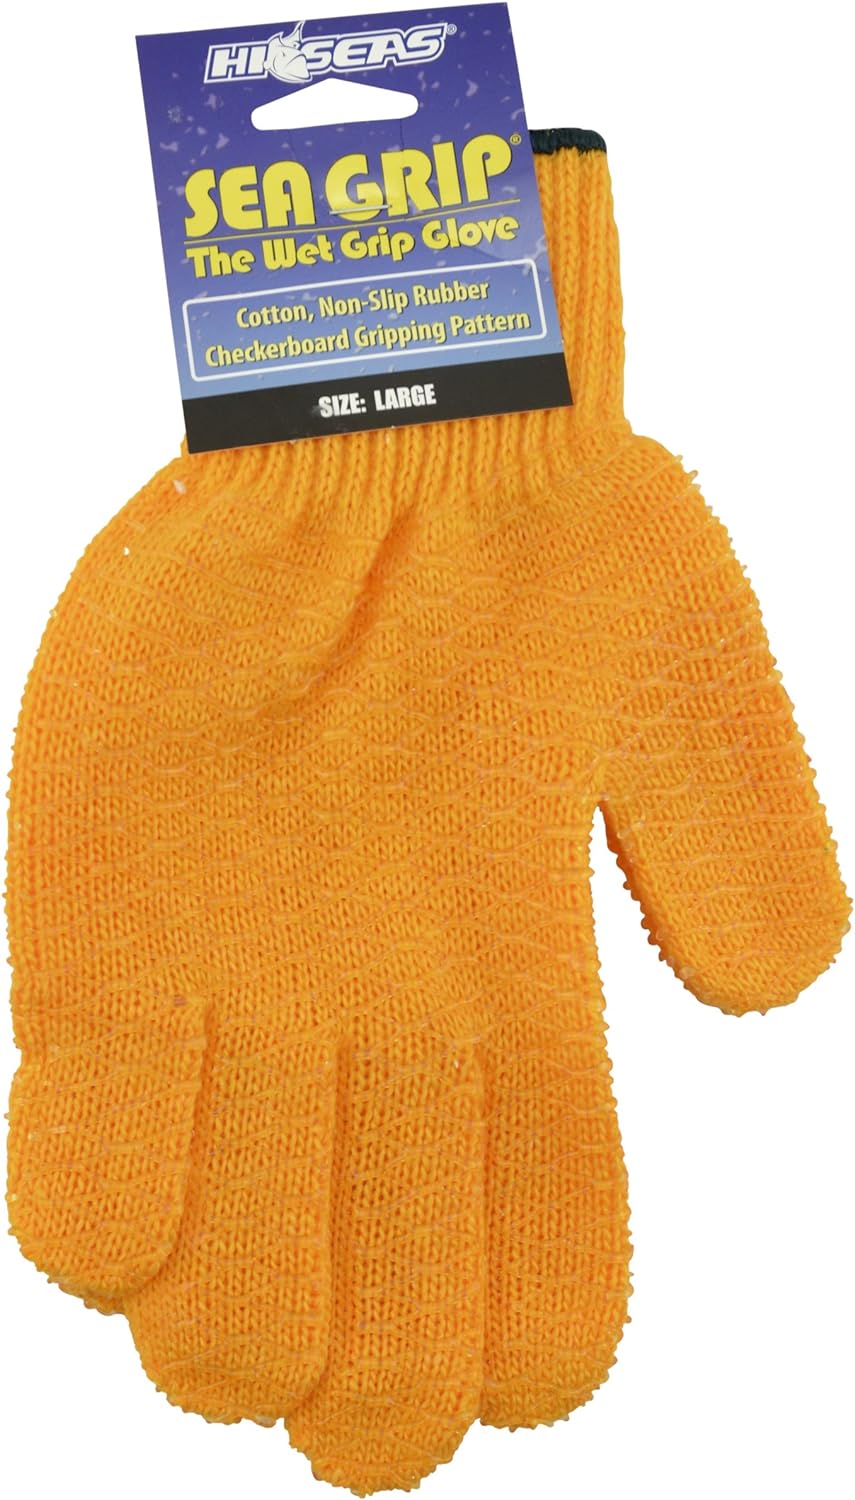 Hi-Seas HG-404-L Sea Grip Non-Slip Pattern Glove, Large, Orange